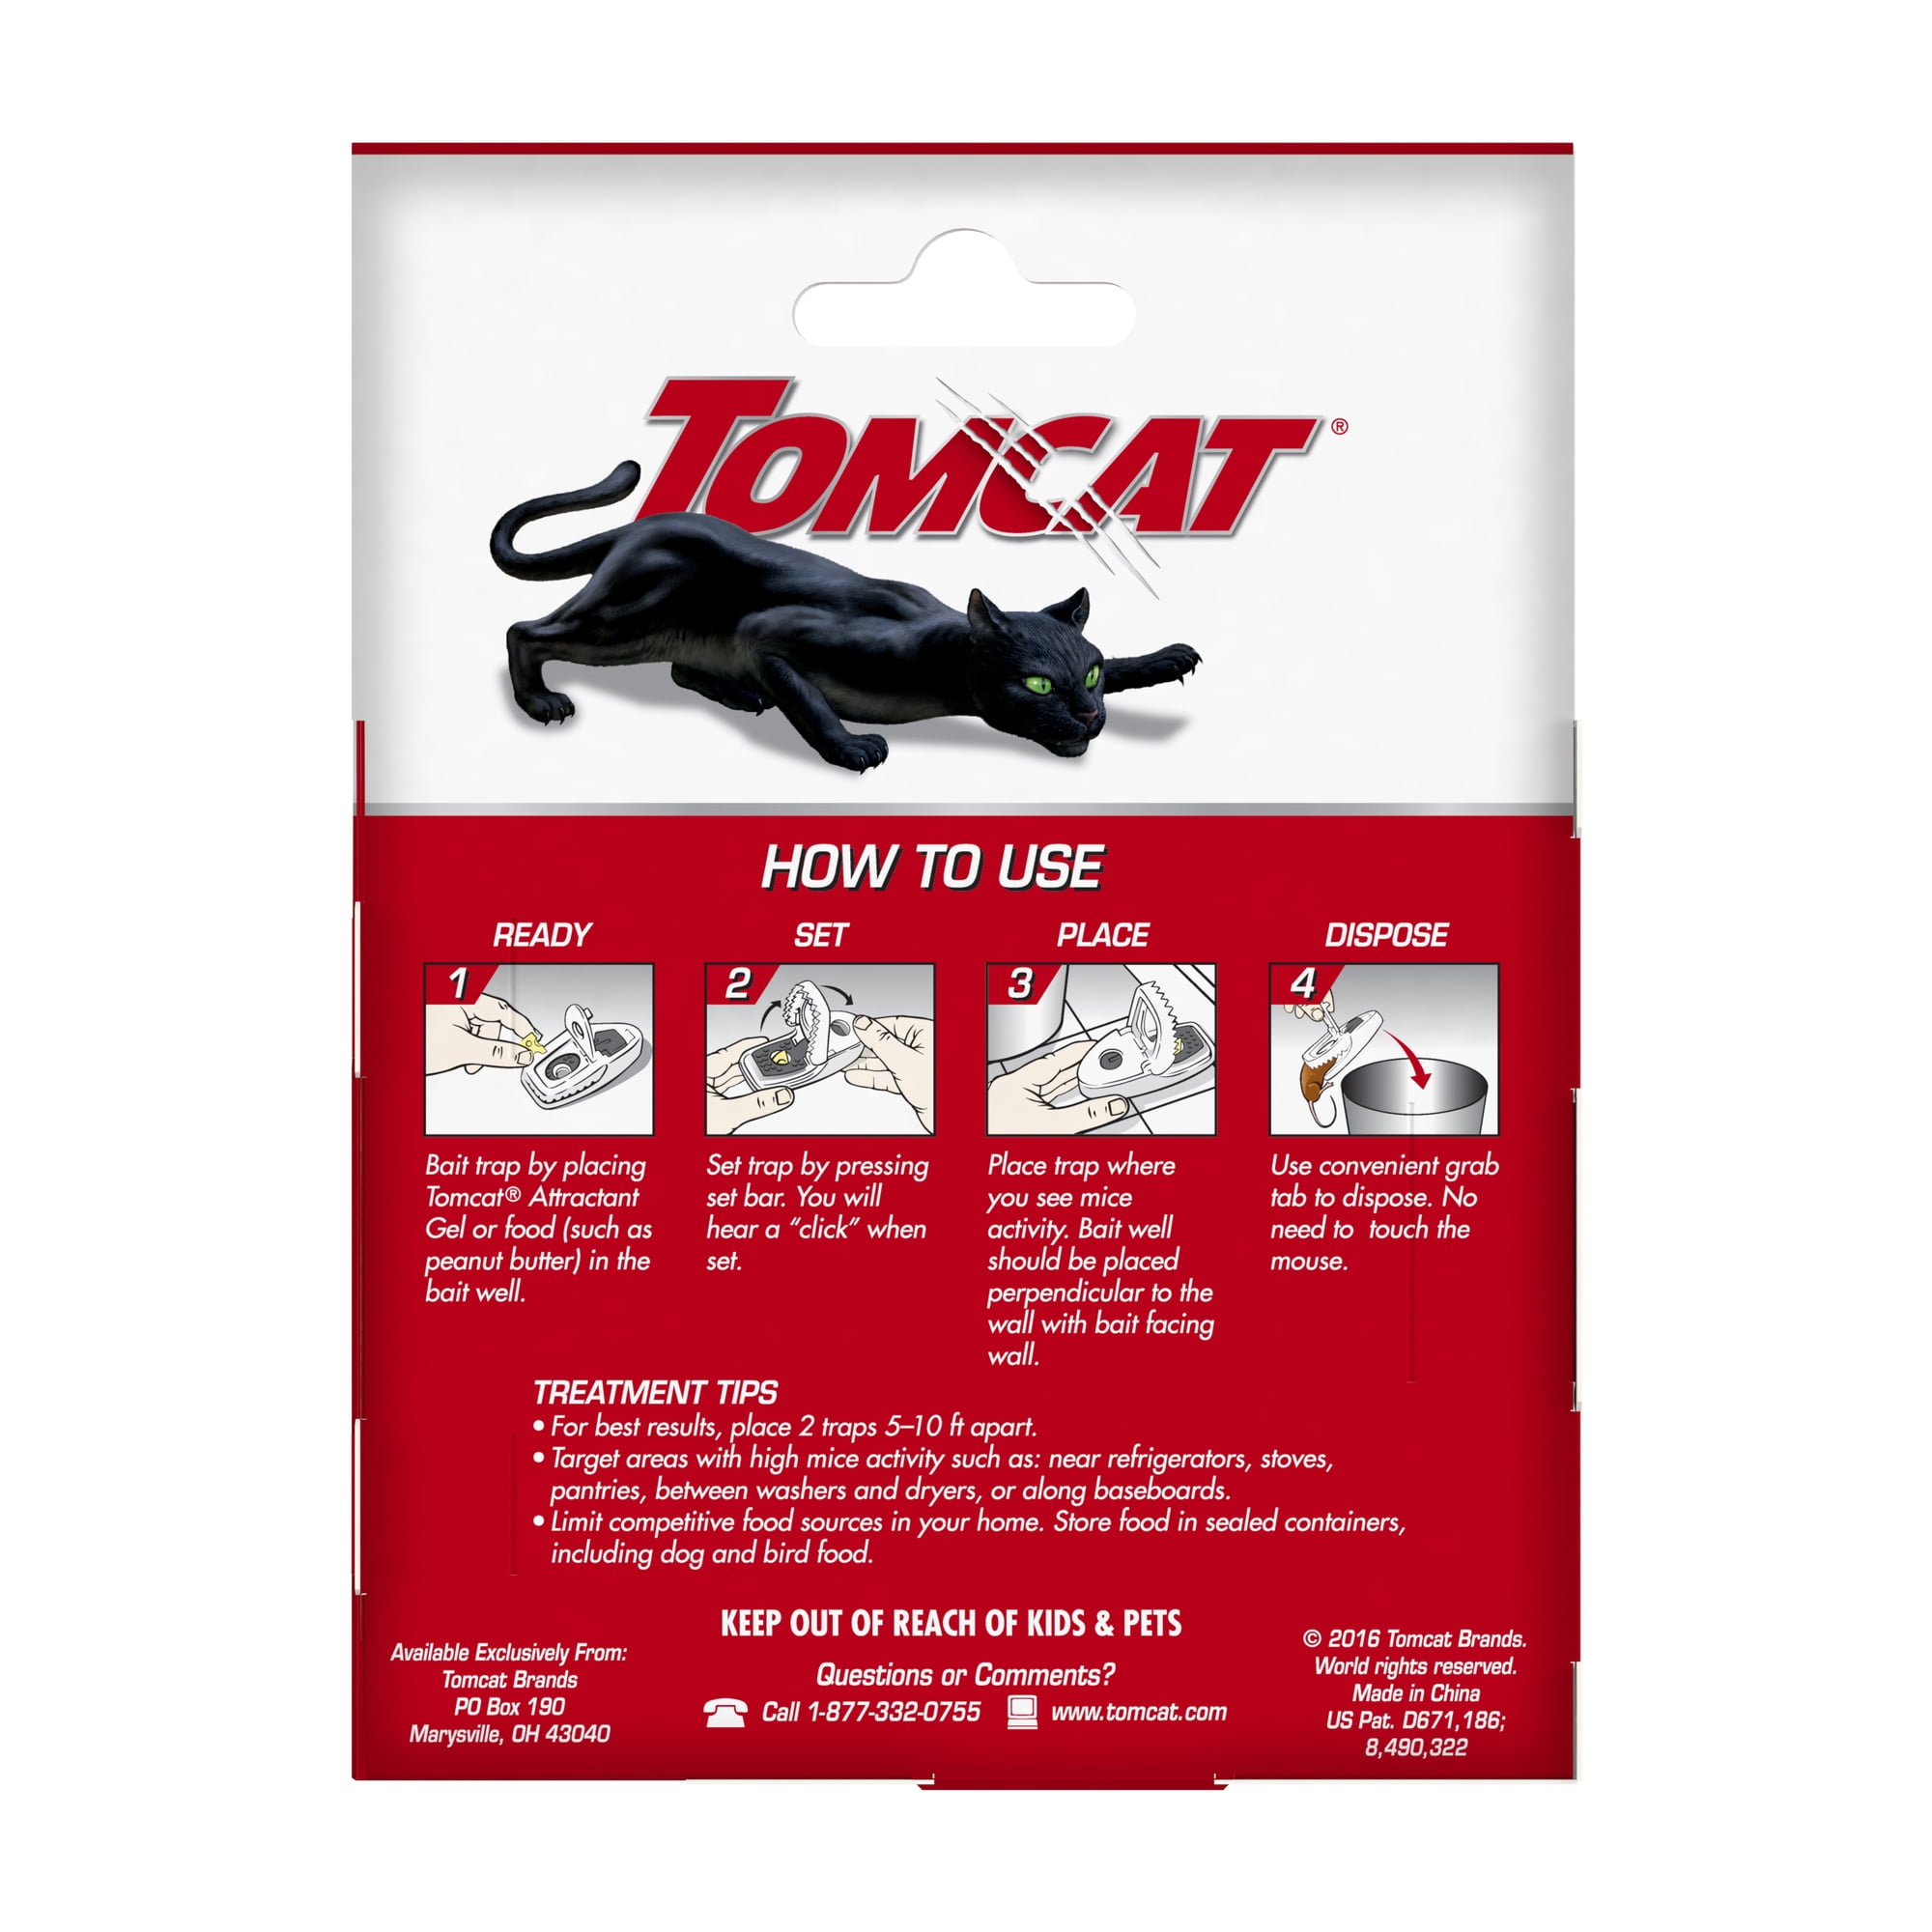 BEST CLASSIC MOUSE TRAP - Tomcat Press 'N Set Mouse Trap - Review